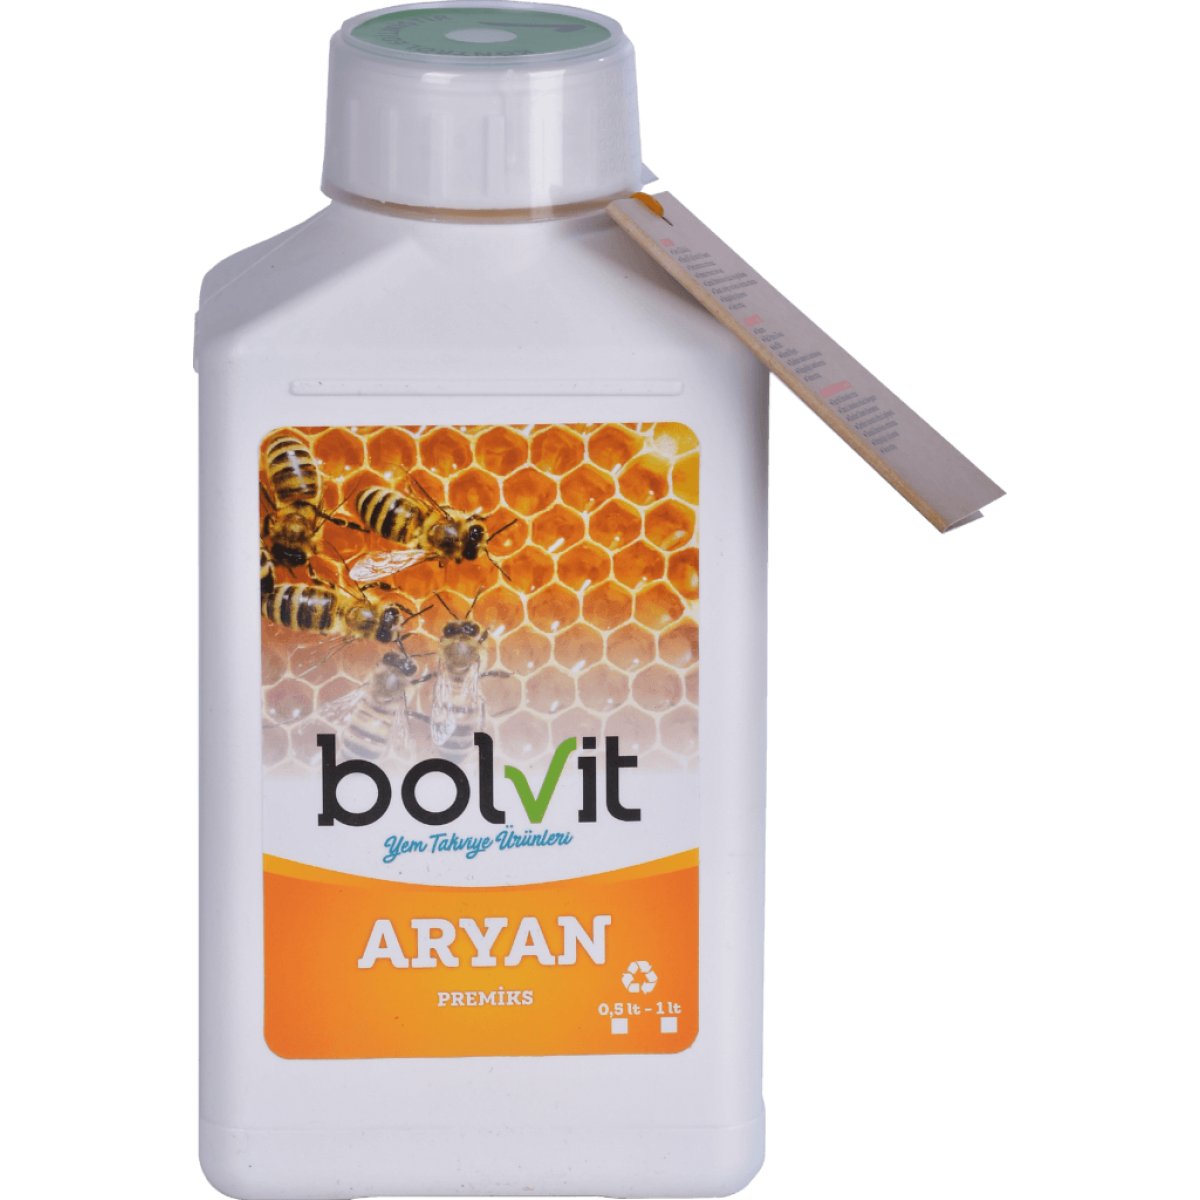 Bolvit Aryan-Premix